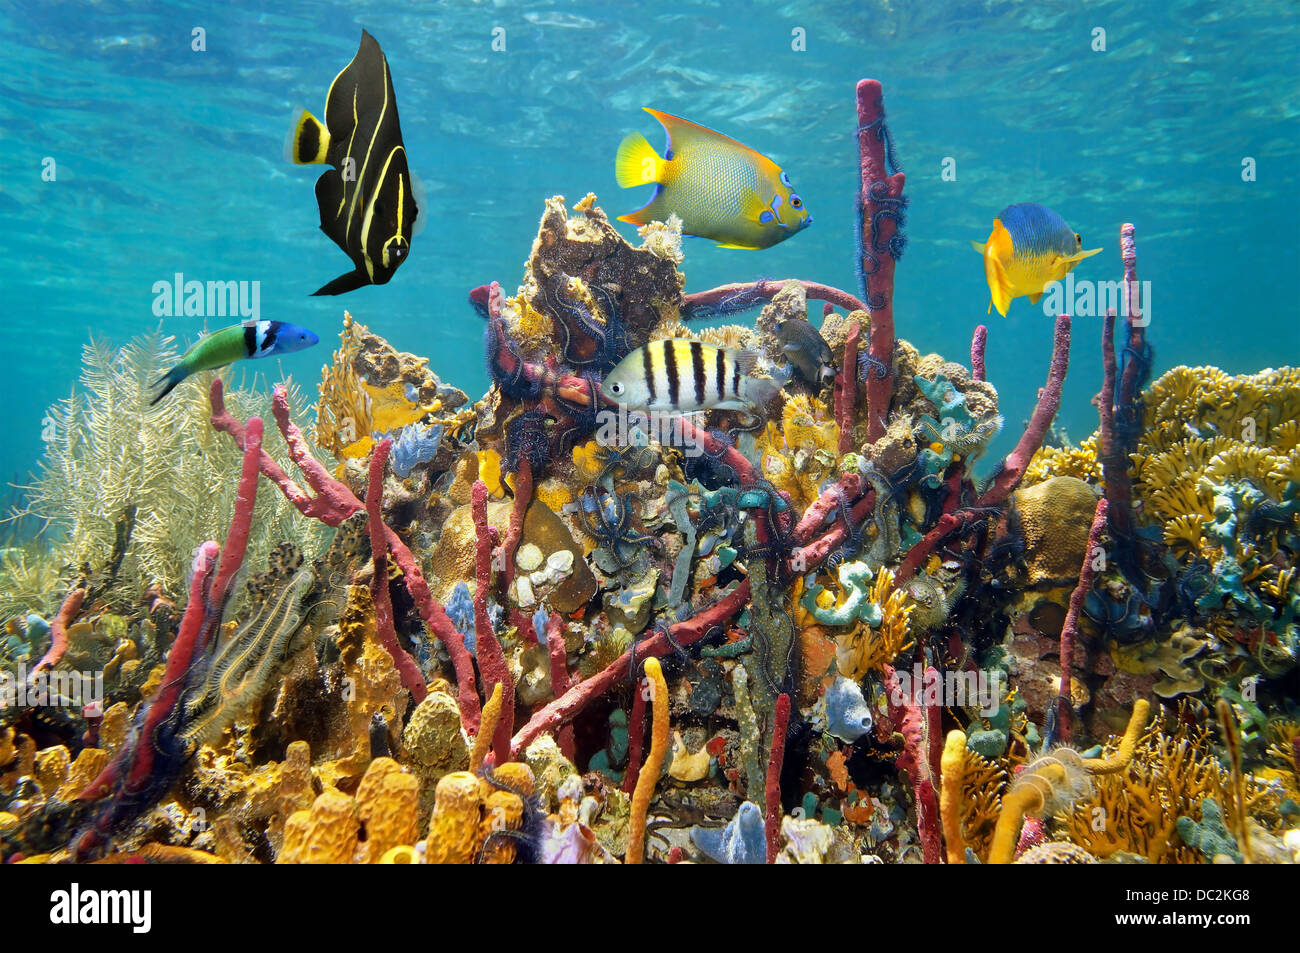 Colores de la vida marina submarina en un arrecife de coral, mar Caribe Foto de stock